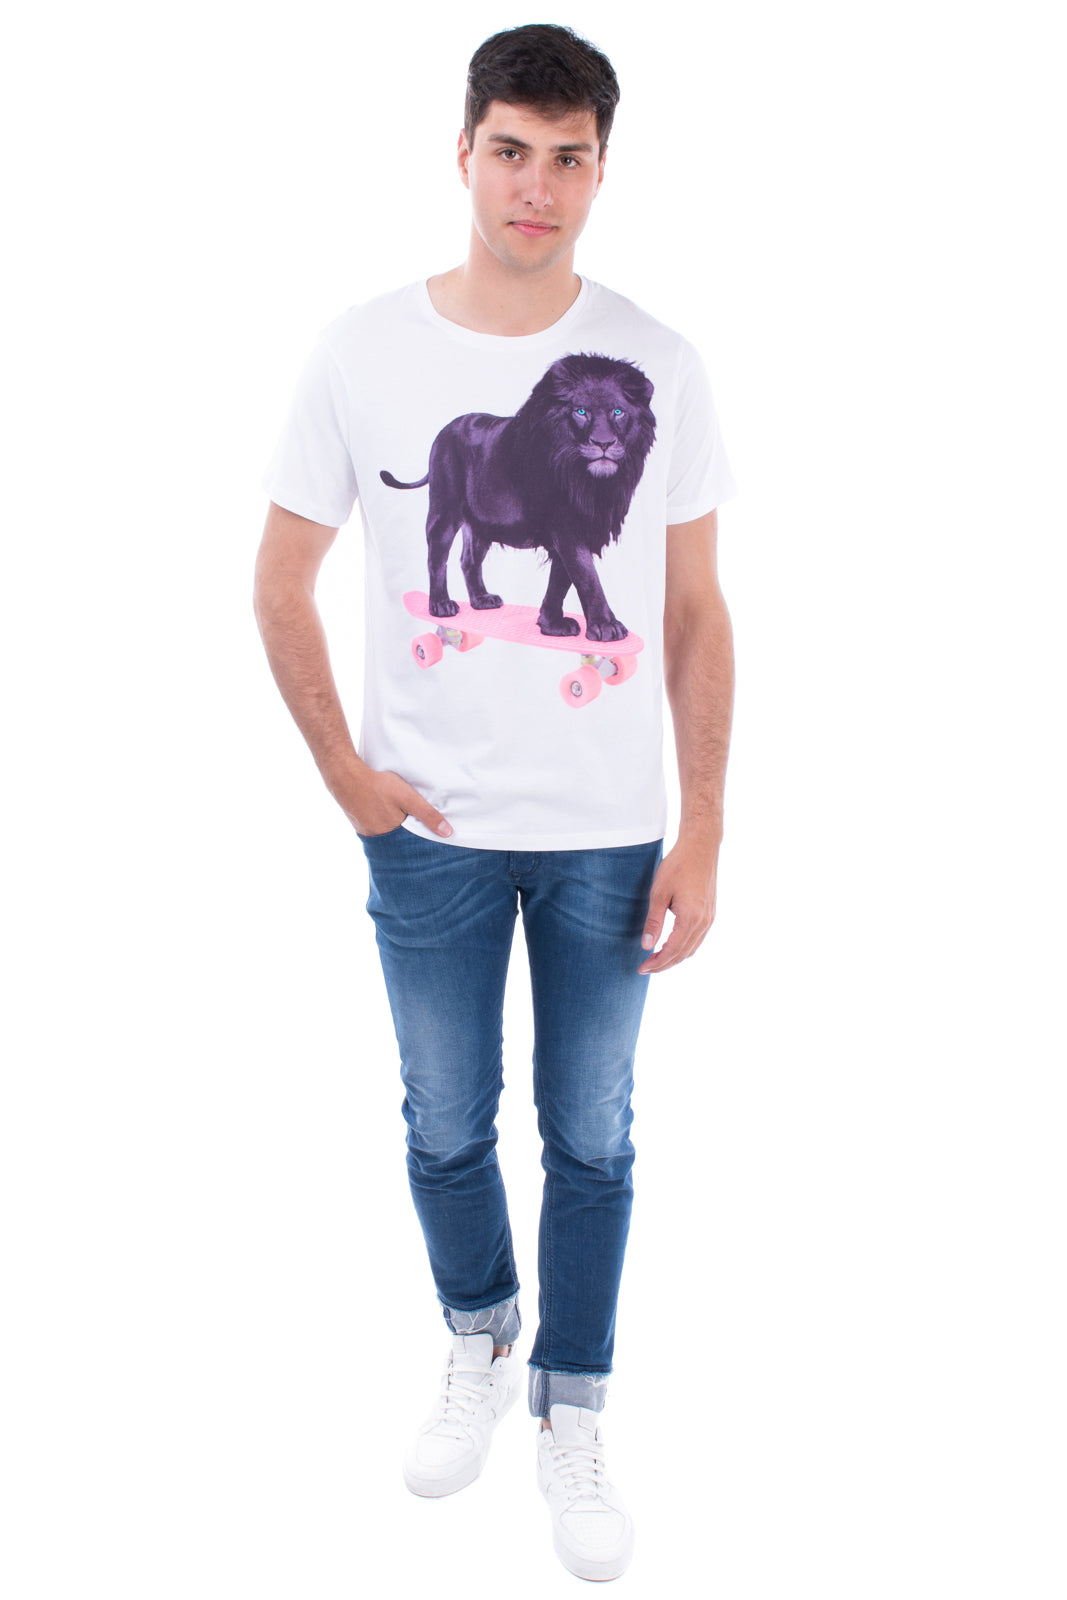 ARMANI EXCHANGE x PAUL FUENTES T-Shirt Top Size L Lion Skate Print Crew Neck gallery main photo